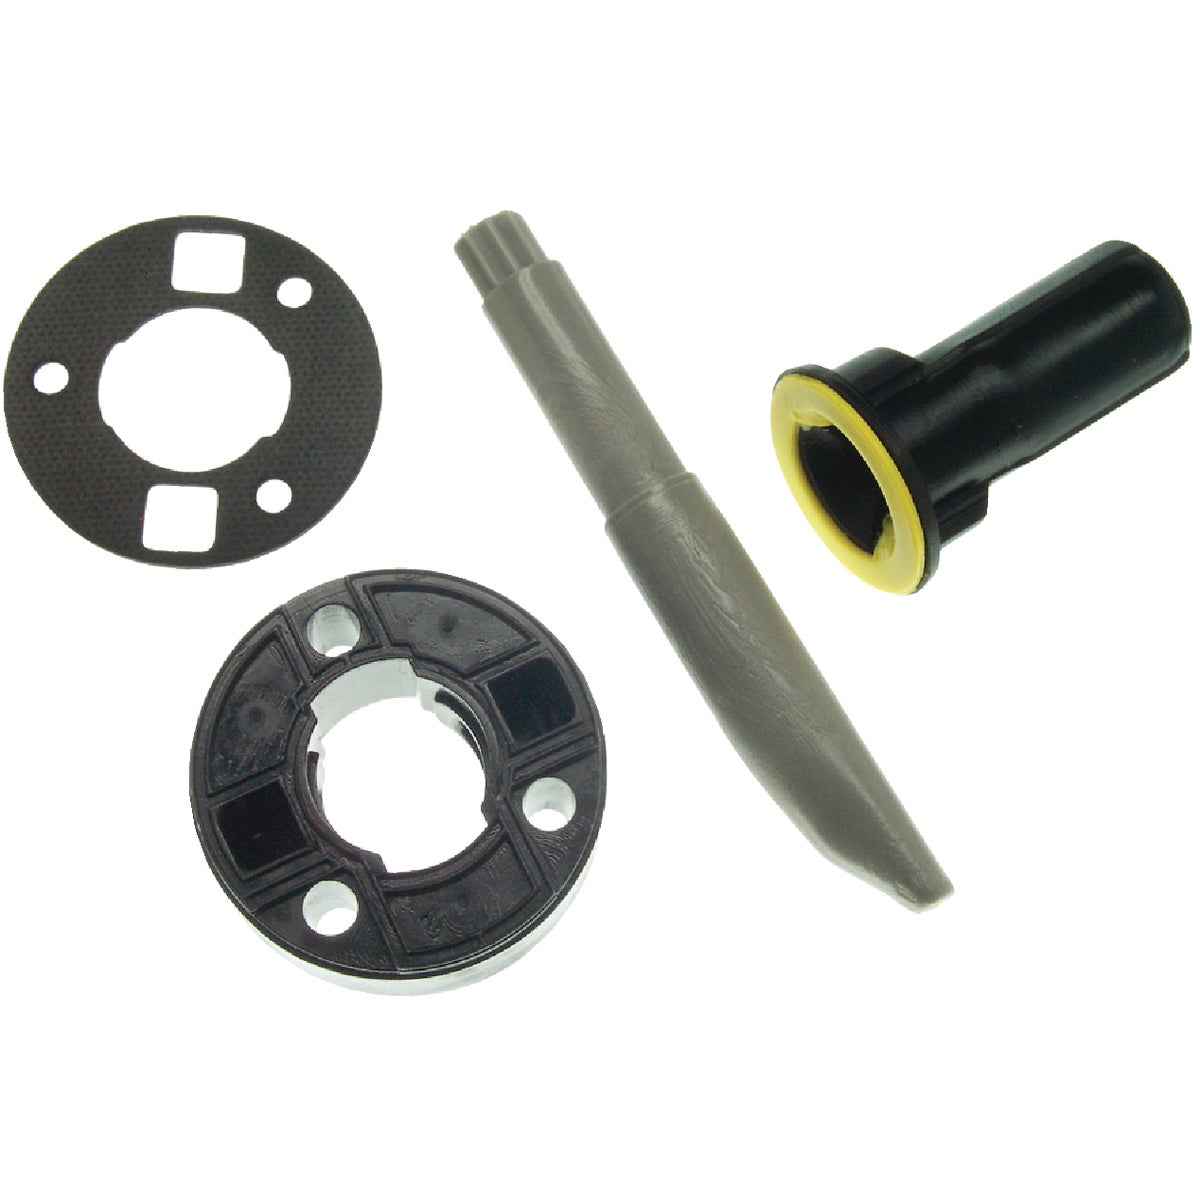 Item 419050, Danco BR-1 Replacement Faucet Cartridge For Bradley/Cole Single-Handle 